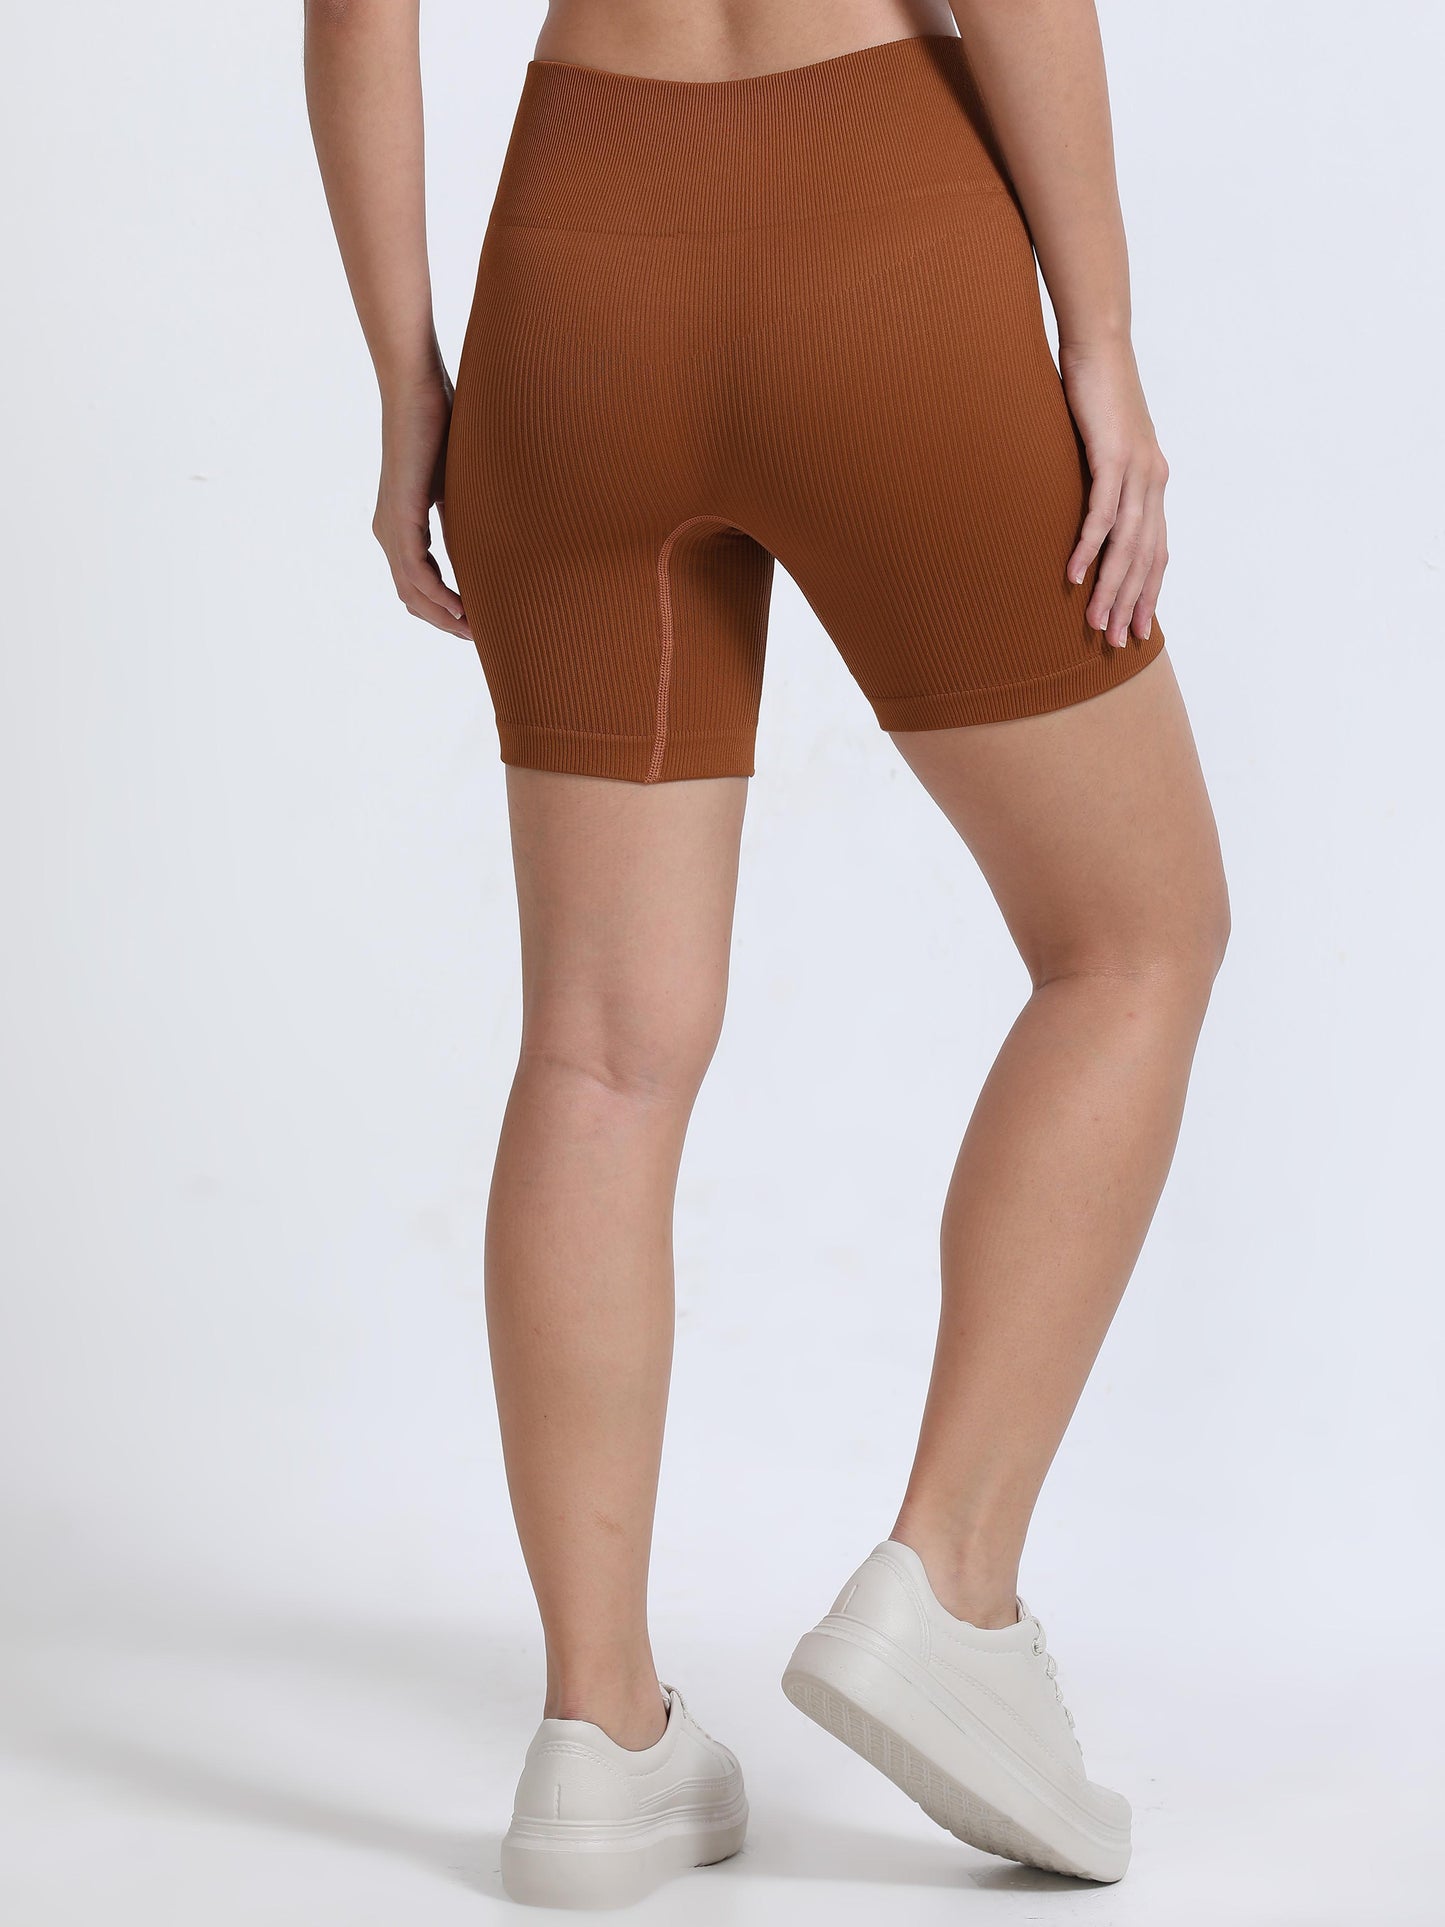 Brown Shorts Women